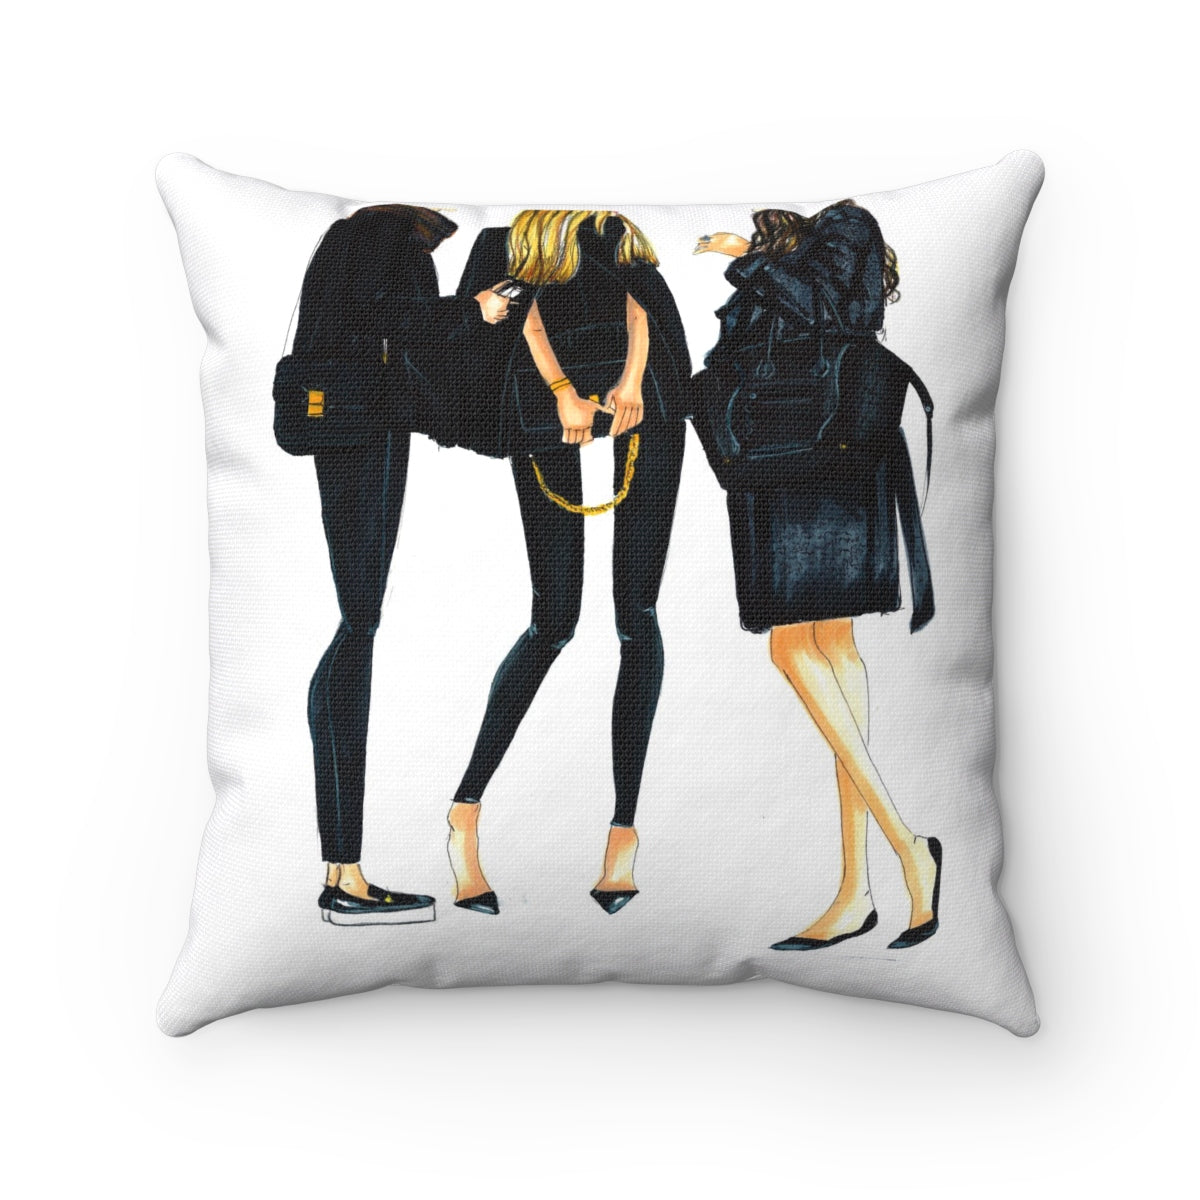 Ladies in Black Pillow